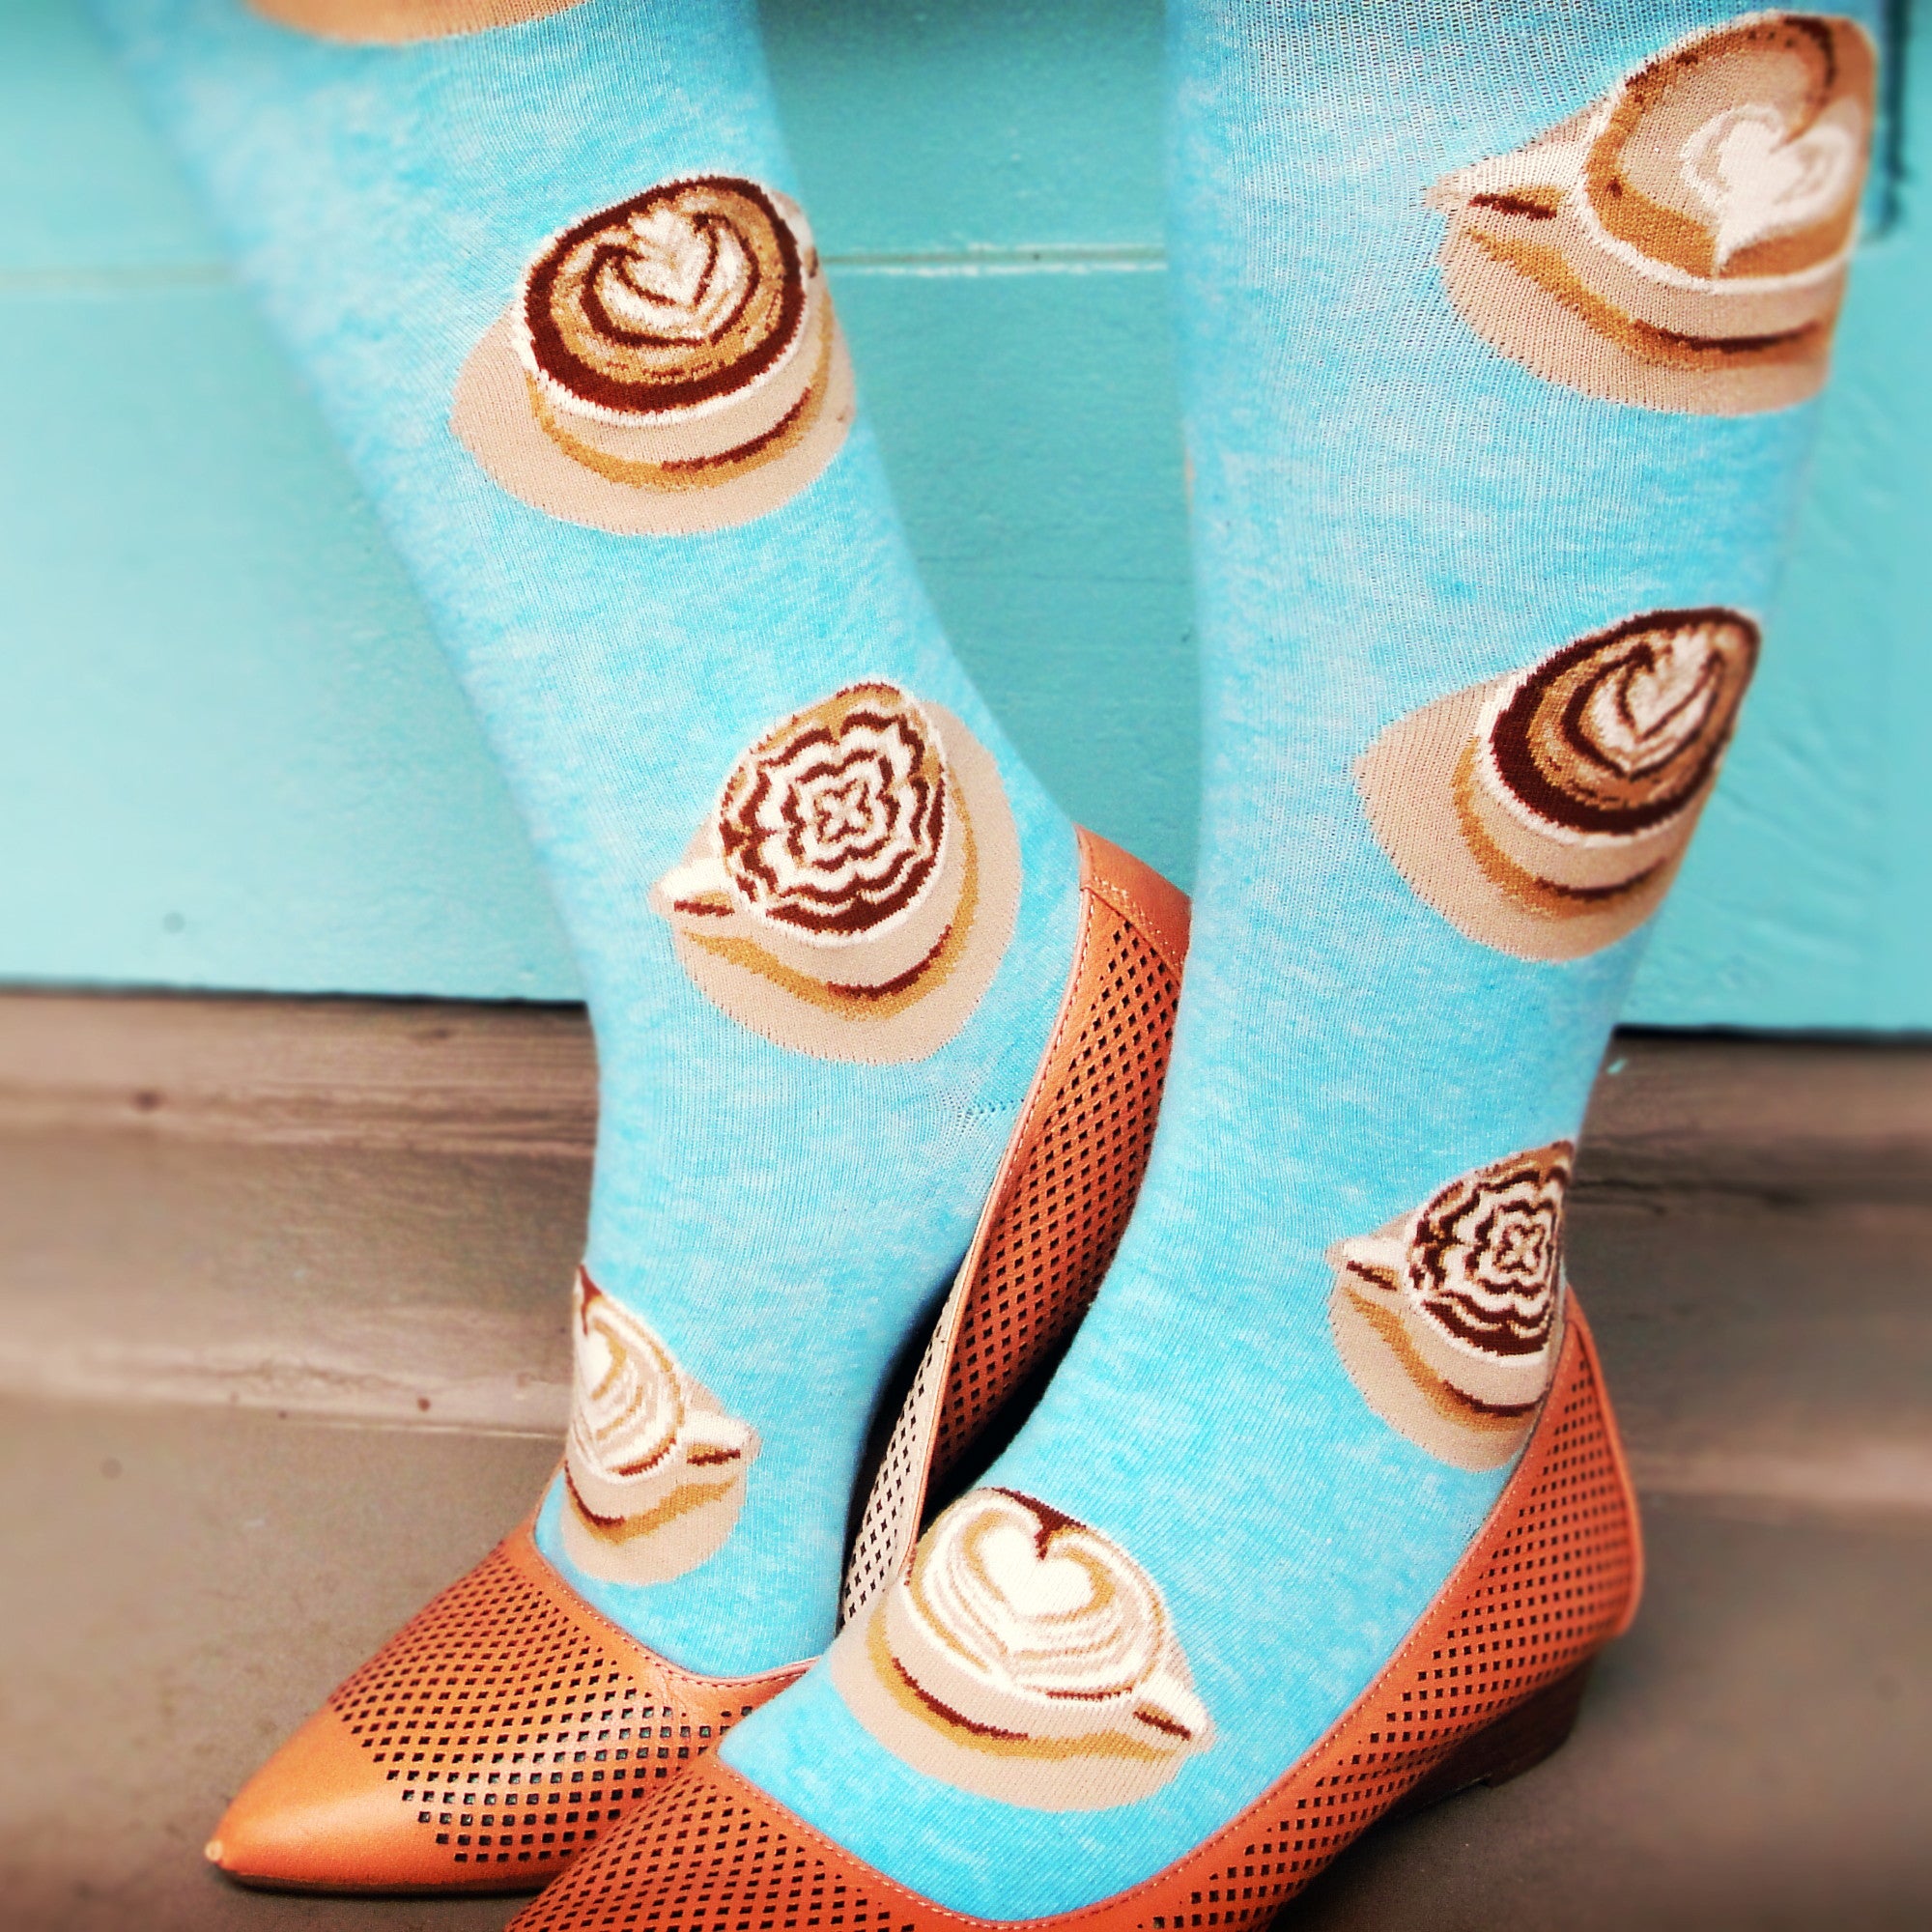 Coffee socks, like ModSocks' cute aqua knee socks featuring cups of latte art, are the best part of waking up.